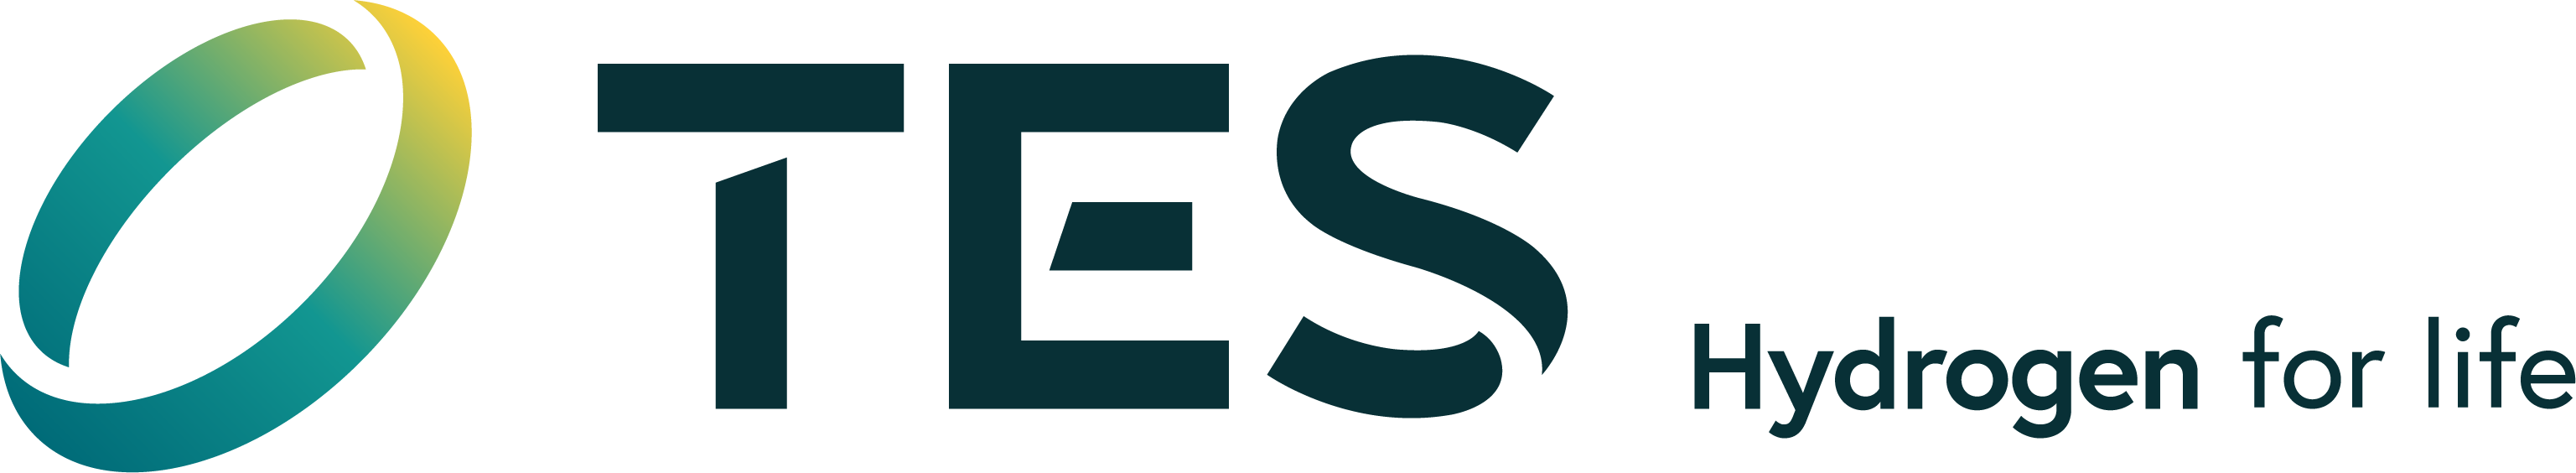 Tree Energy Solutions (TES) Logo